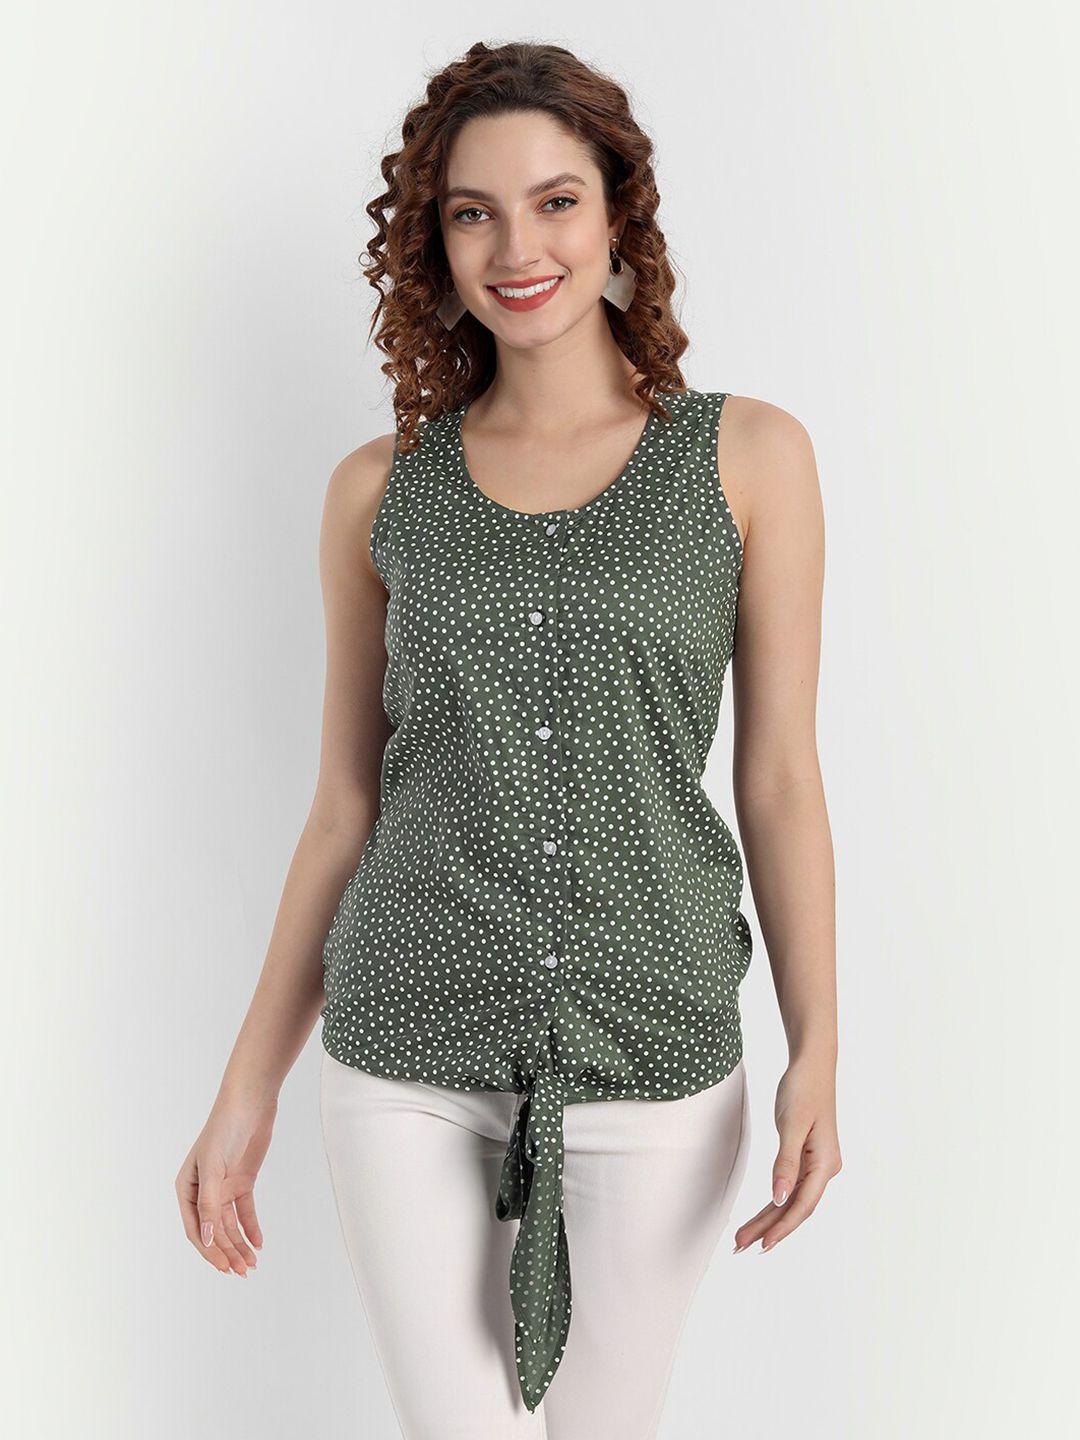 parassio clothings women green geometric print shirt style top